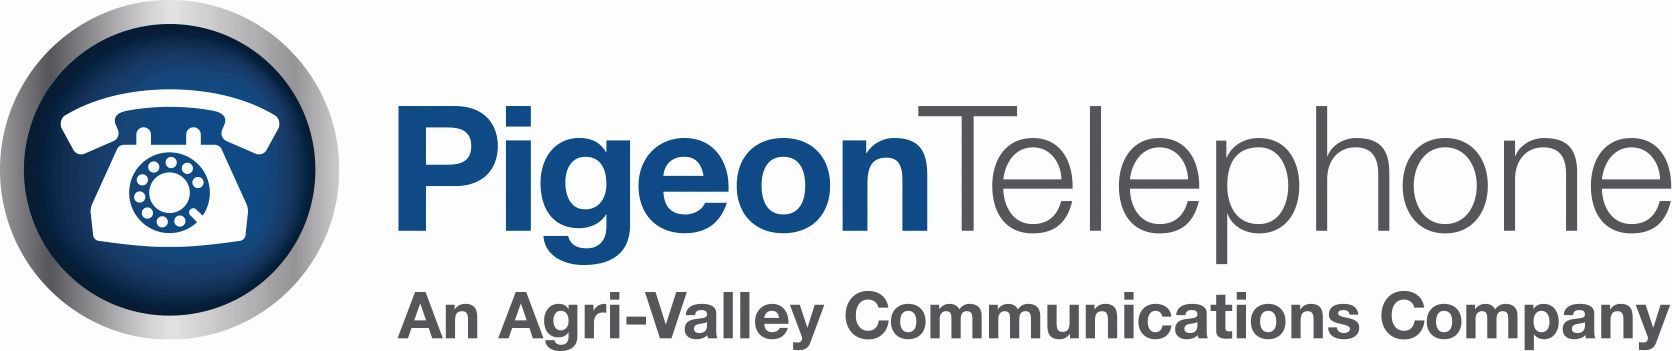 PigeonTelephone Logo 2017.jpg